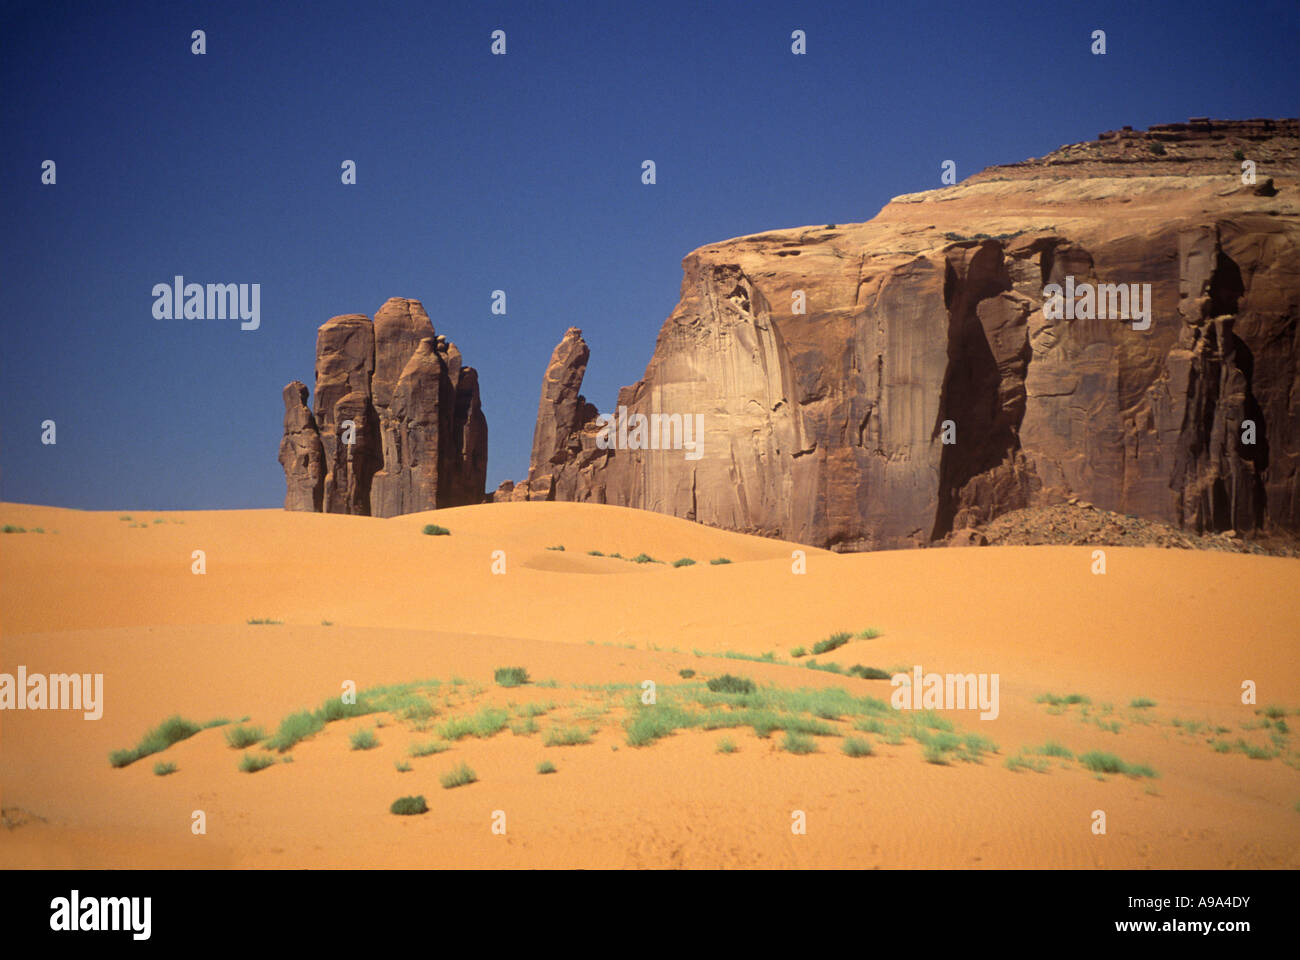 La arena del desierto Monument Valley Navajo Tribal Park Utah, Arizona, EE.UU. Foto de stock